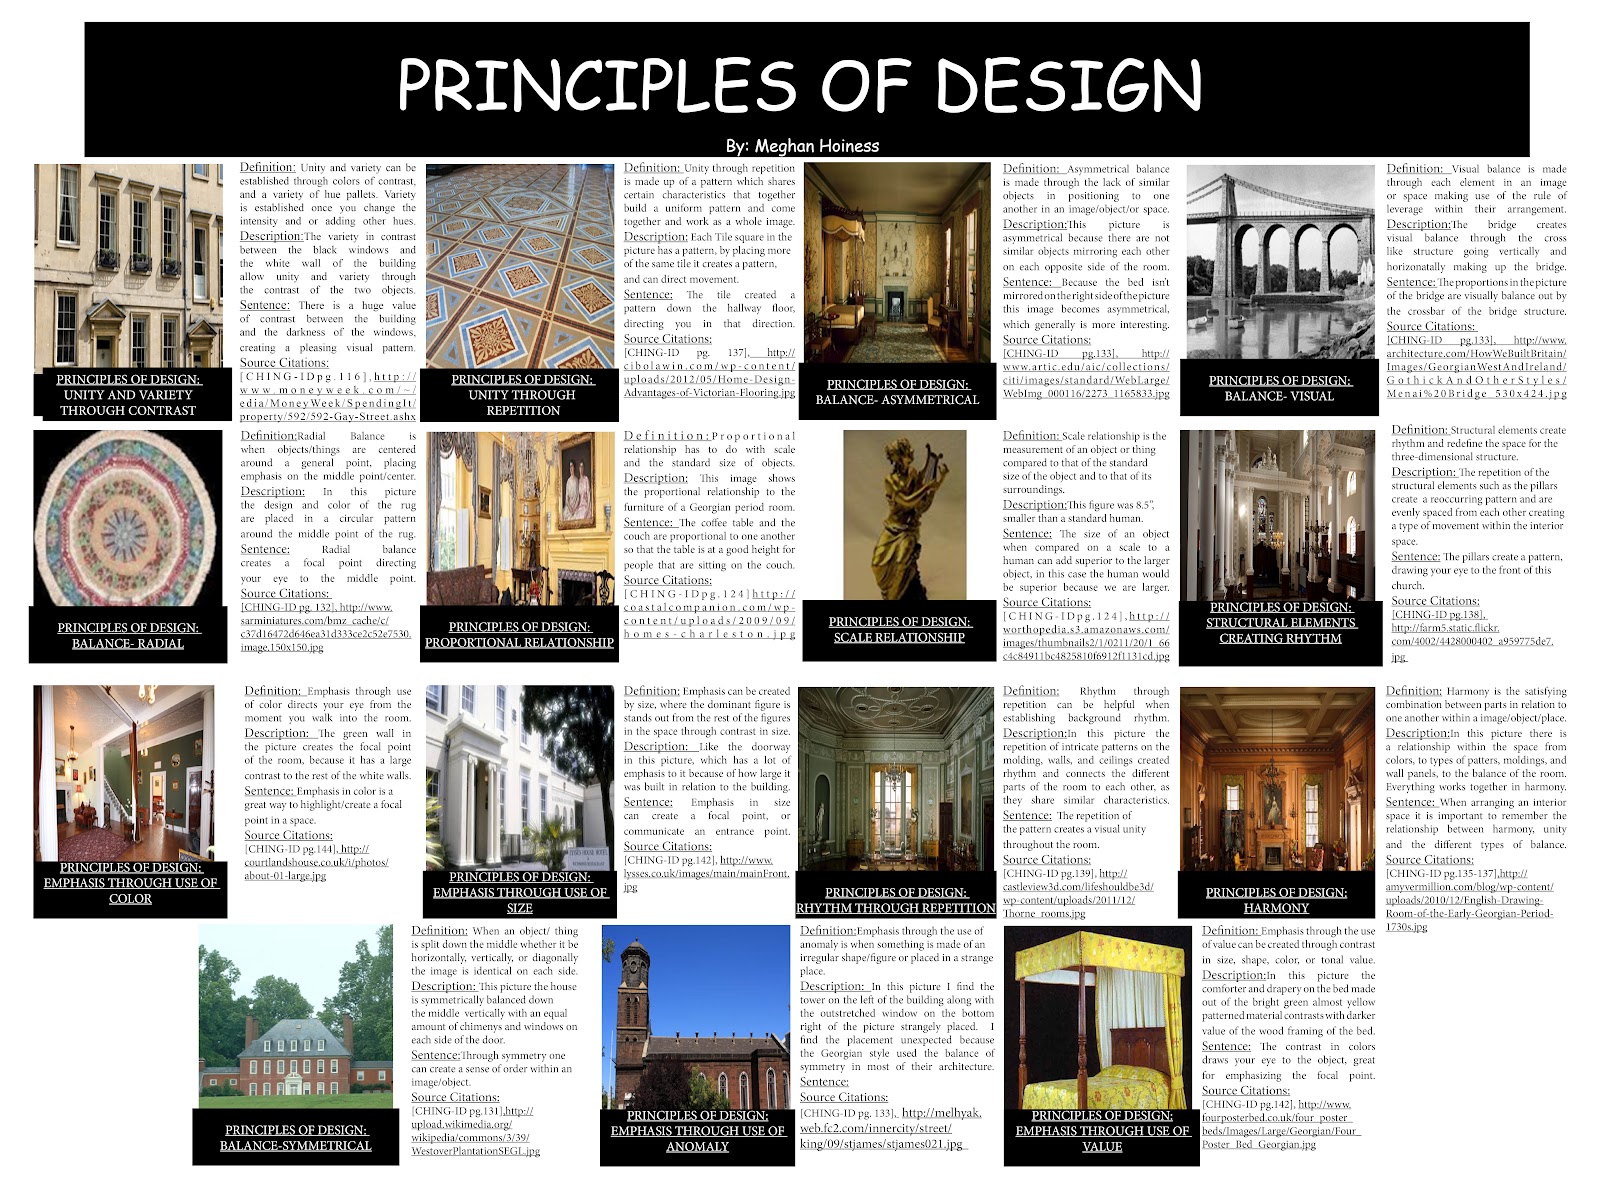 Interior Design Principles and Elements